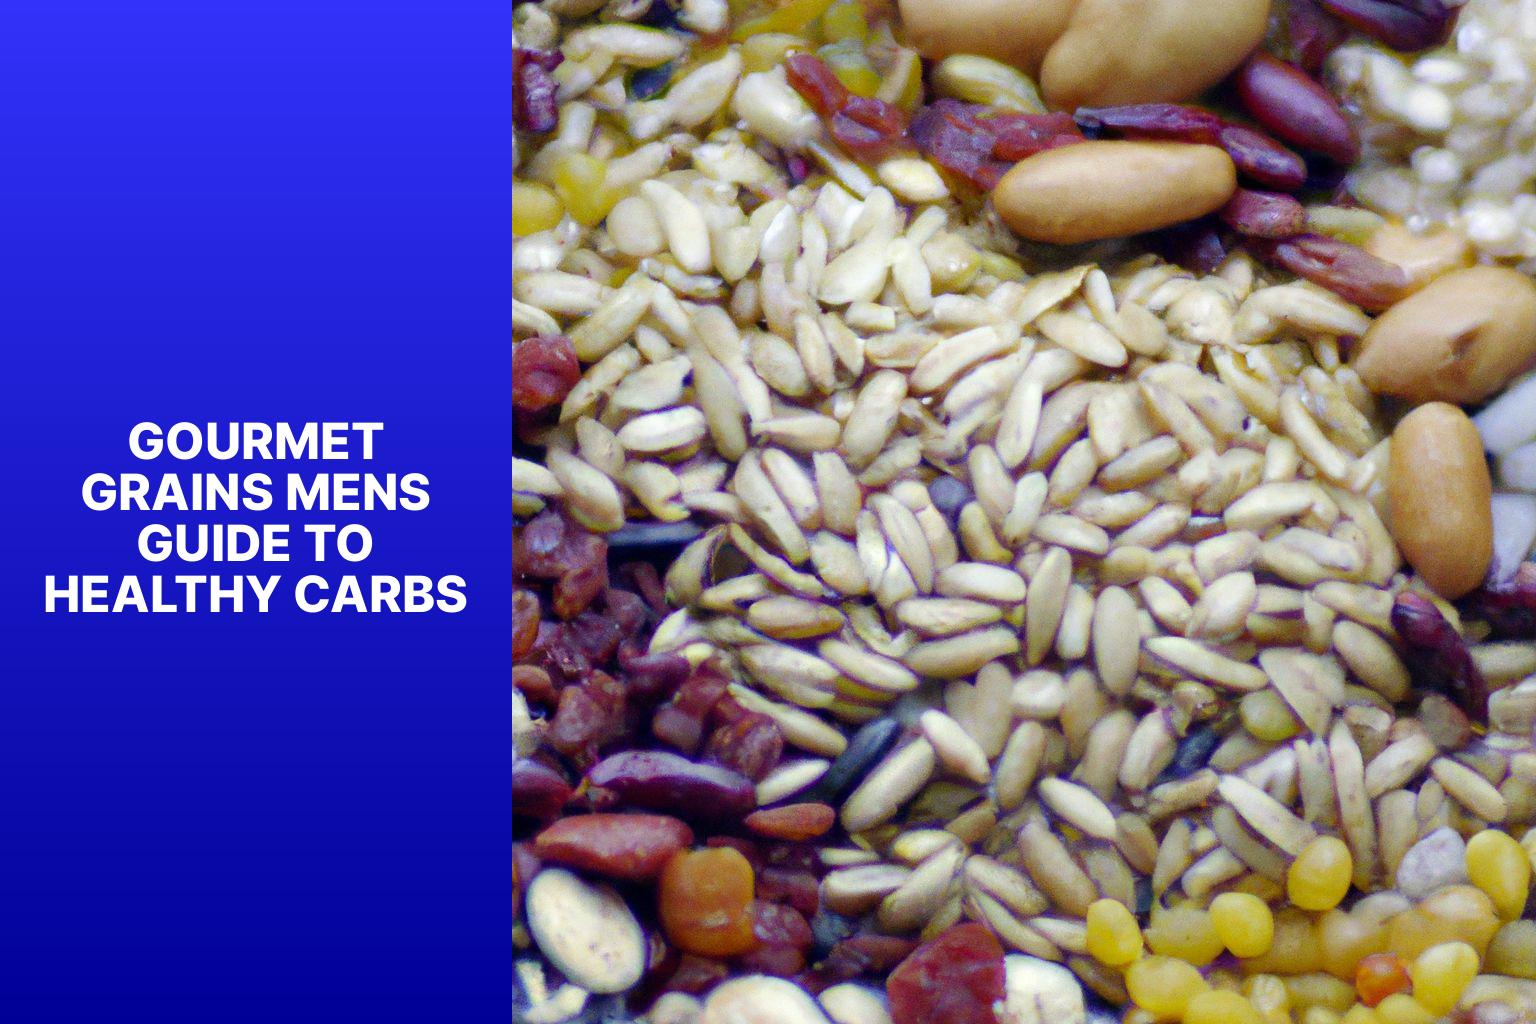 Gourmet Grains: Men’s Guide to Healthy Carbs